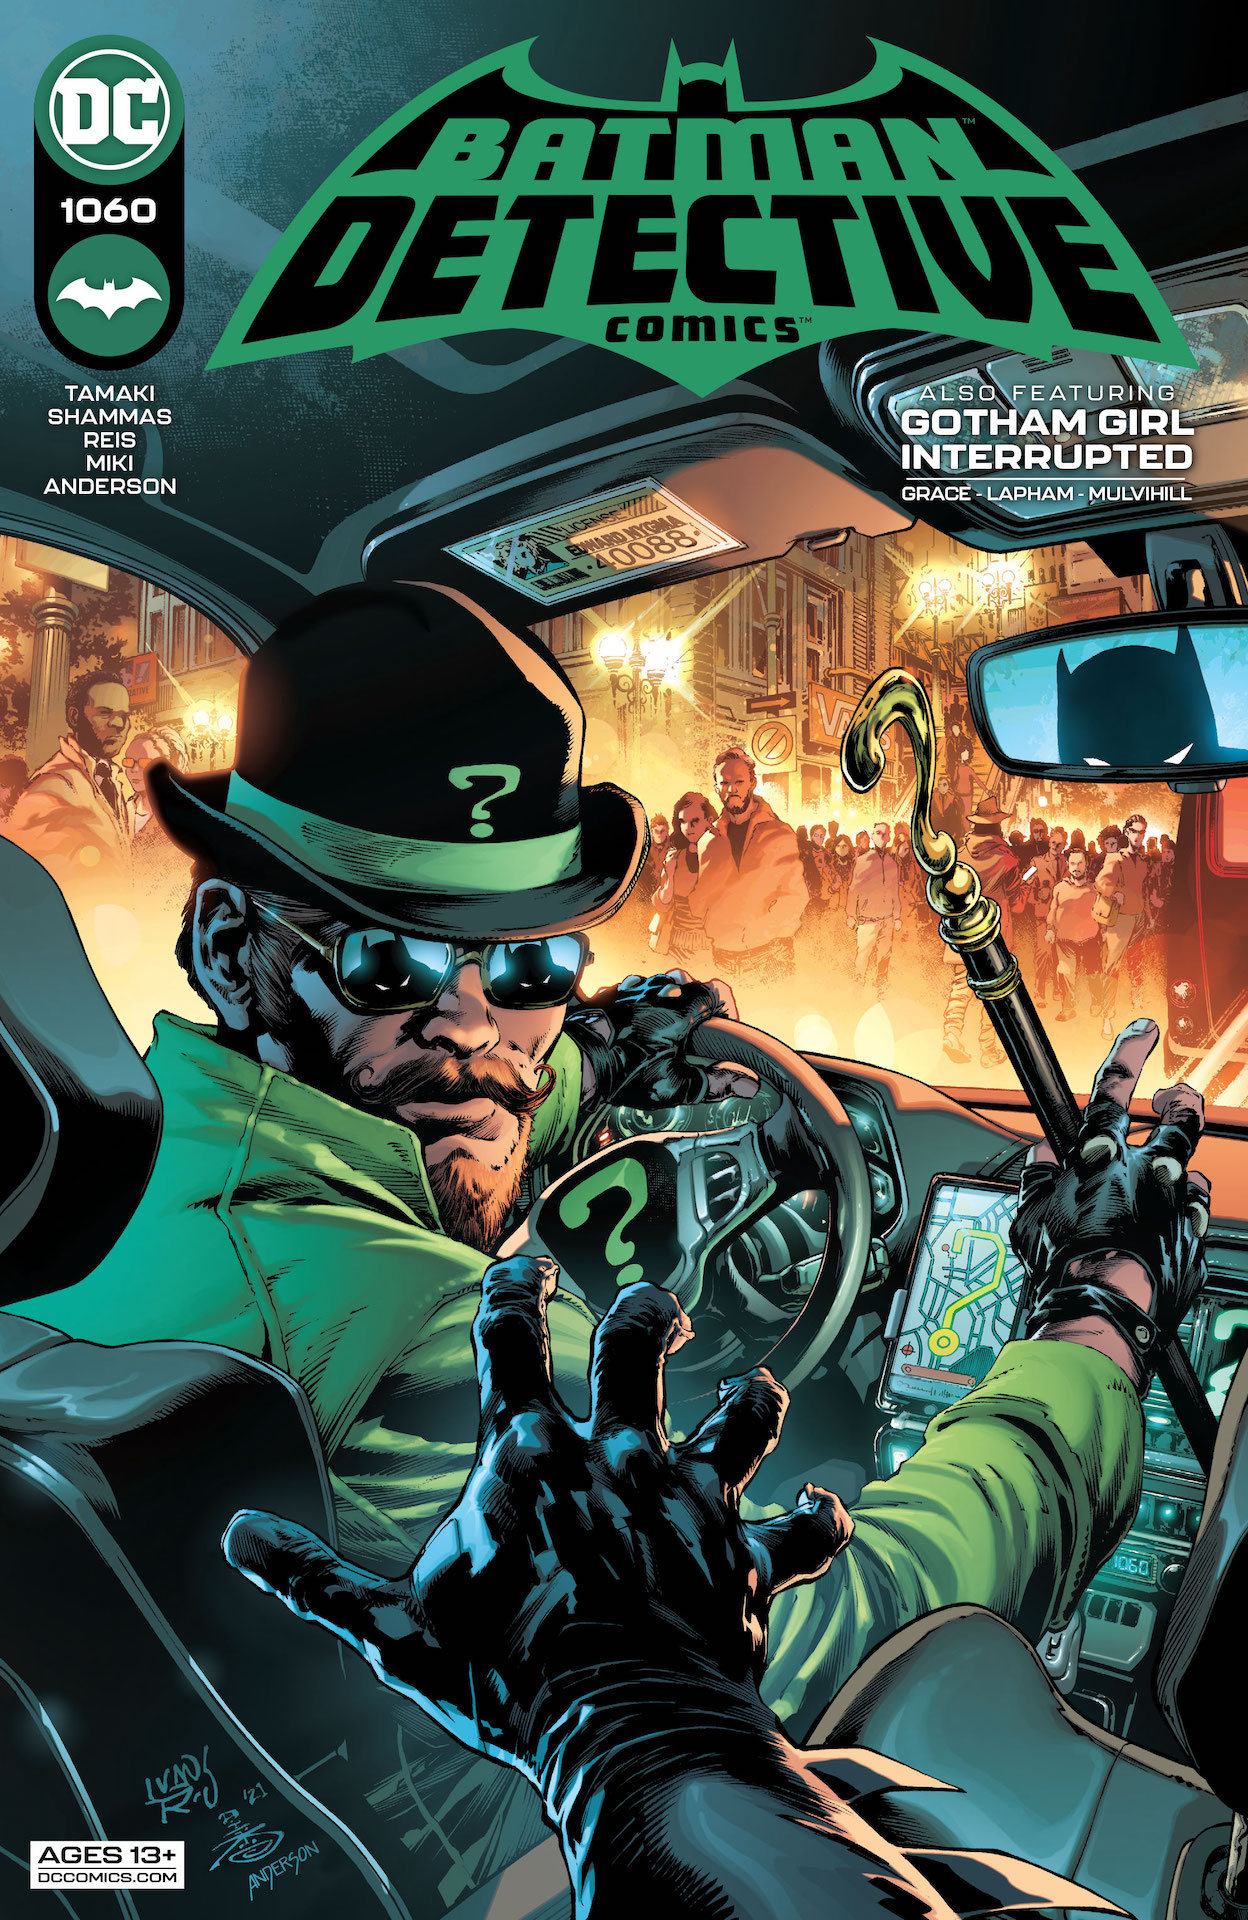 DC Preview: Detective Comics #1060